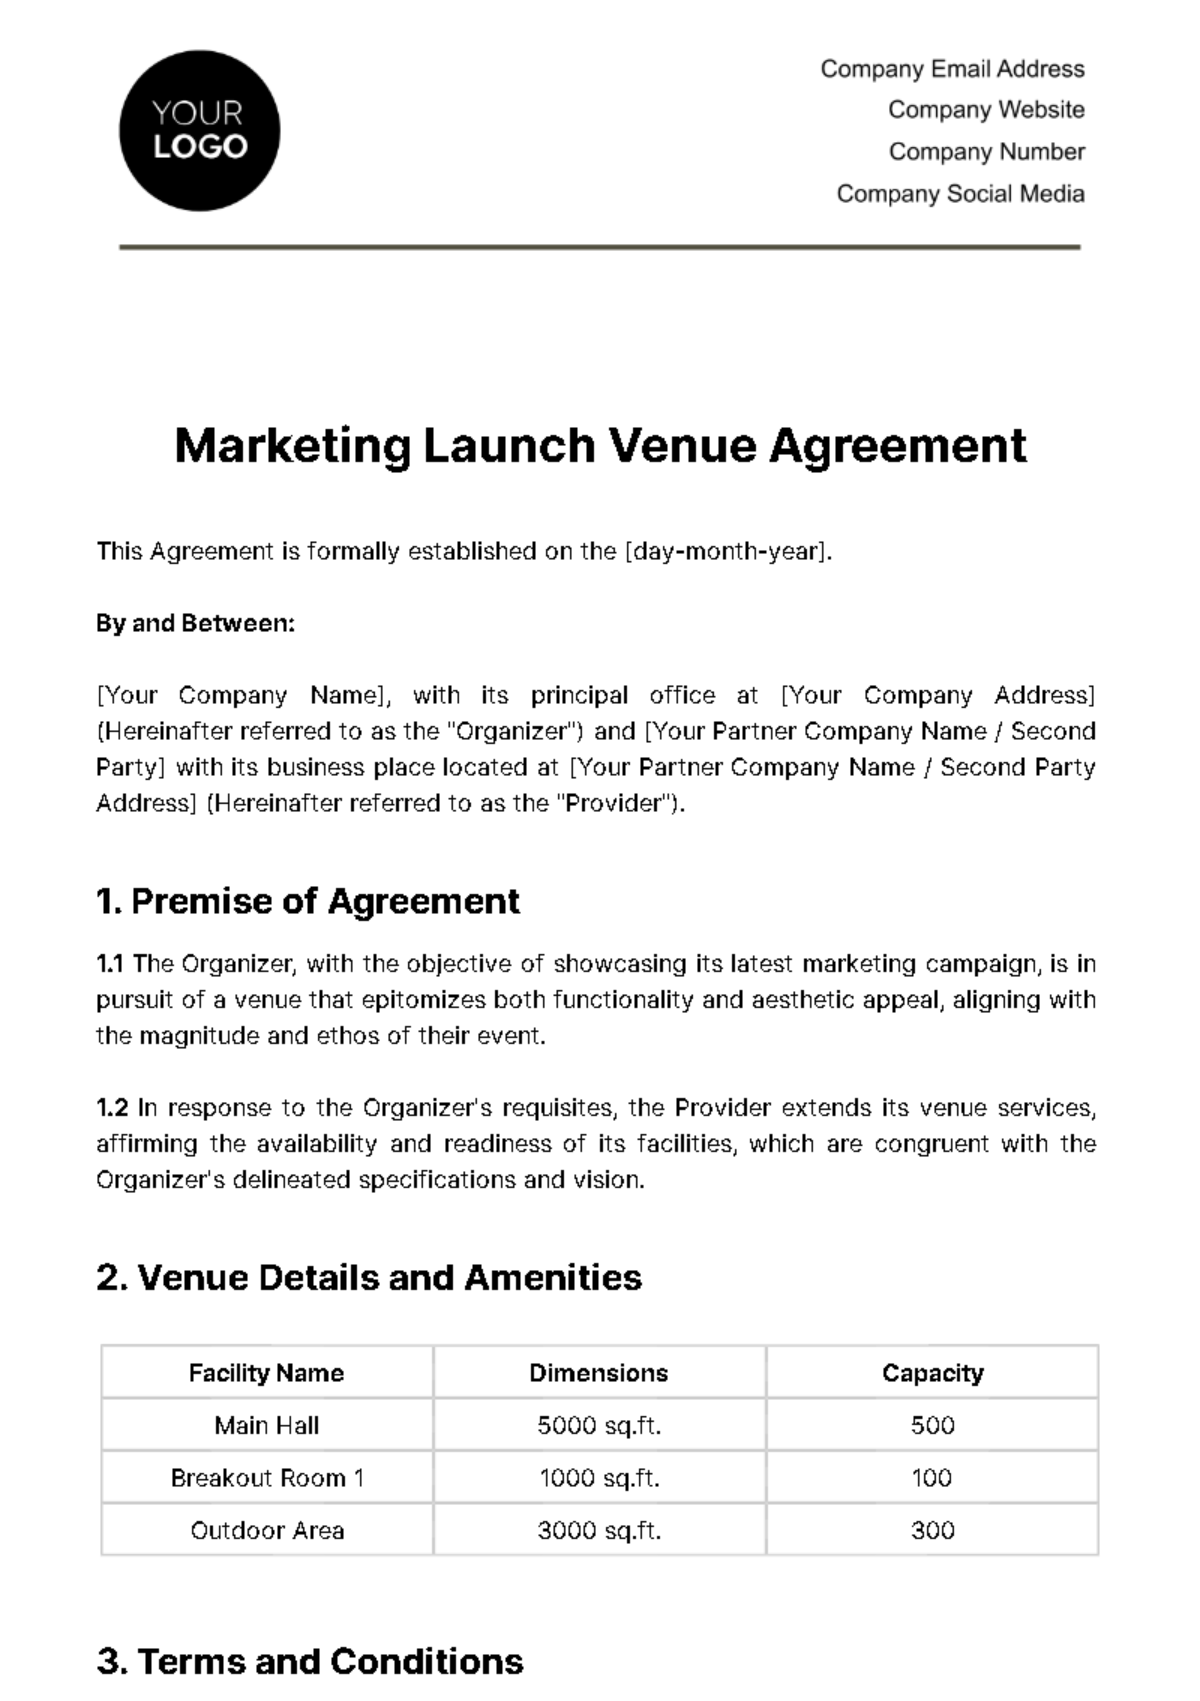 Marketing Launch Venue Agreement Template